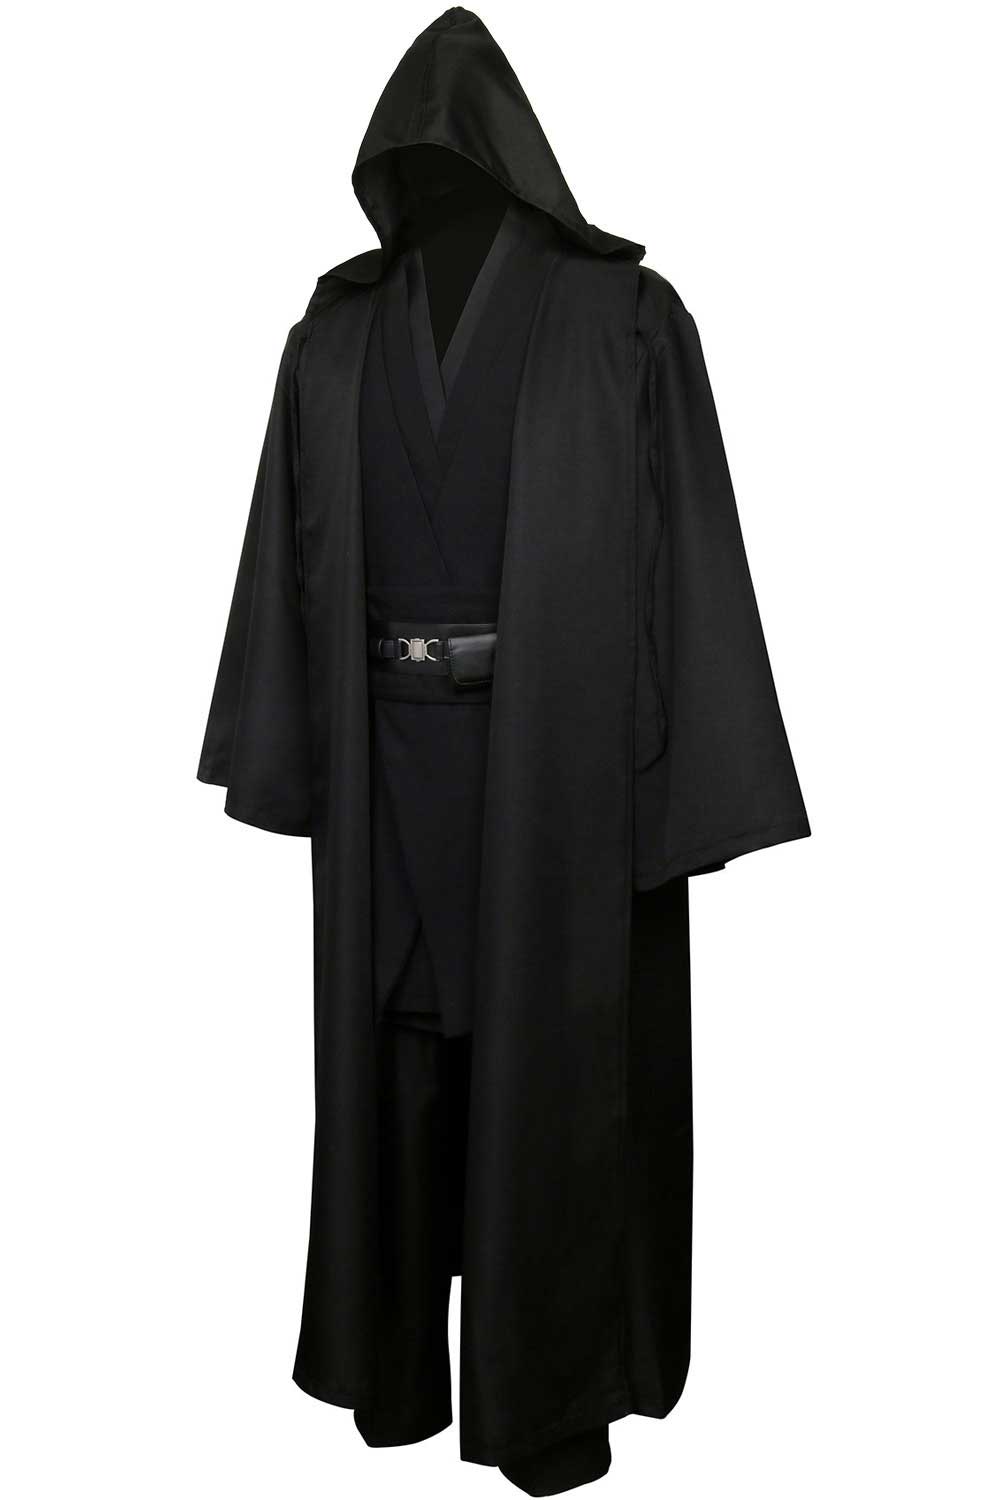 Star Wars Robe Obi Wan Kenobi Jedi Cosplay Costume Outfit